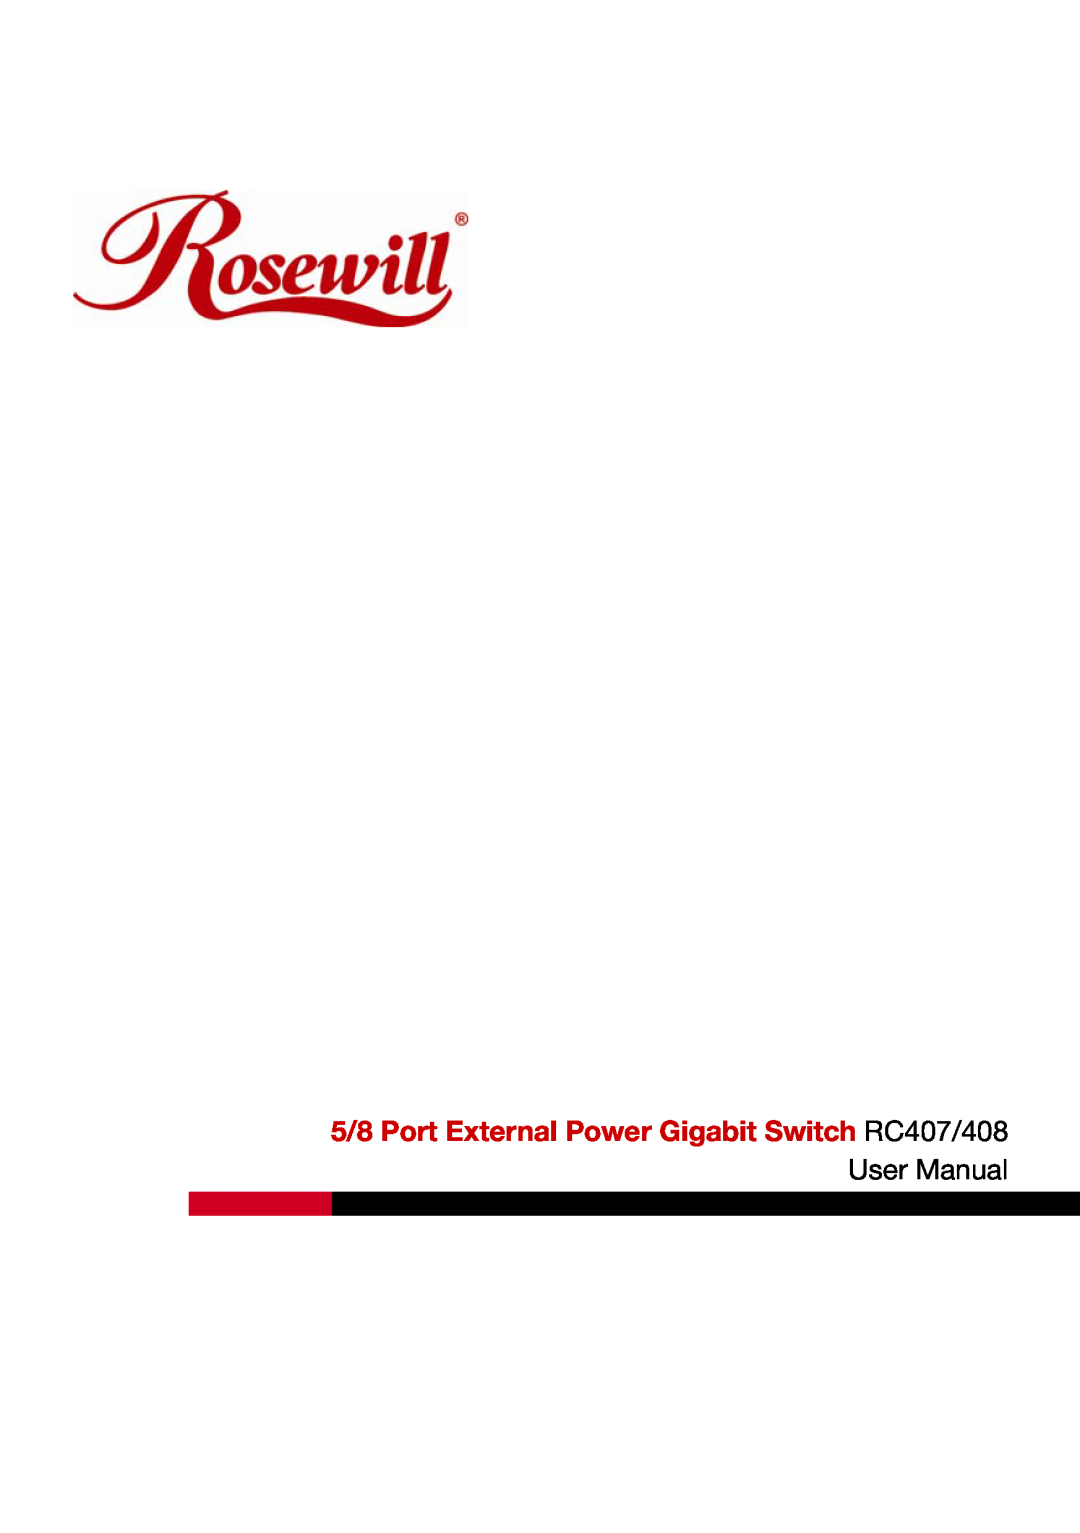 Rosewill RC-407, RC-408 user manual 5/8 Port External Power Gigabit Switch RC407/408, User Manual 